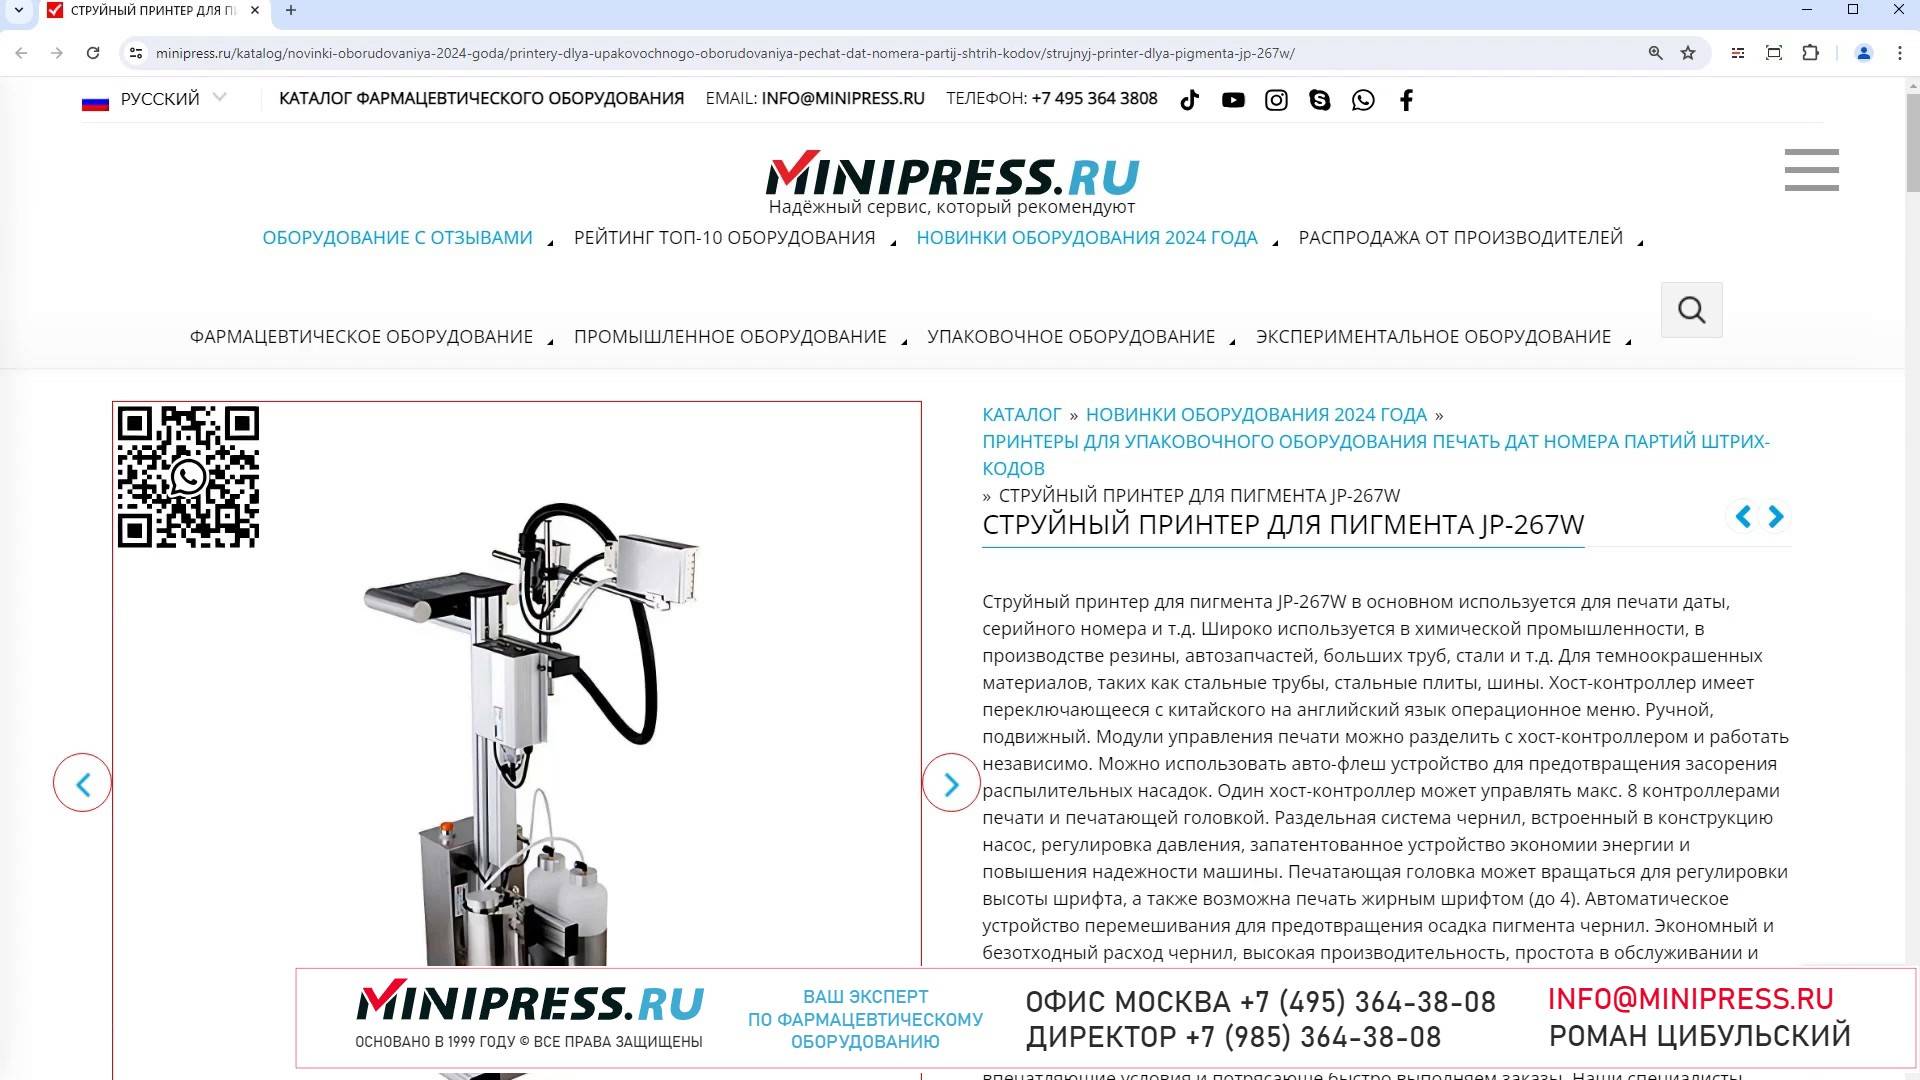 Minipress.ru Струйный принтер для пигмента JP-267W